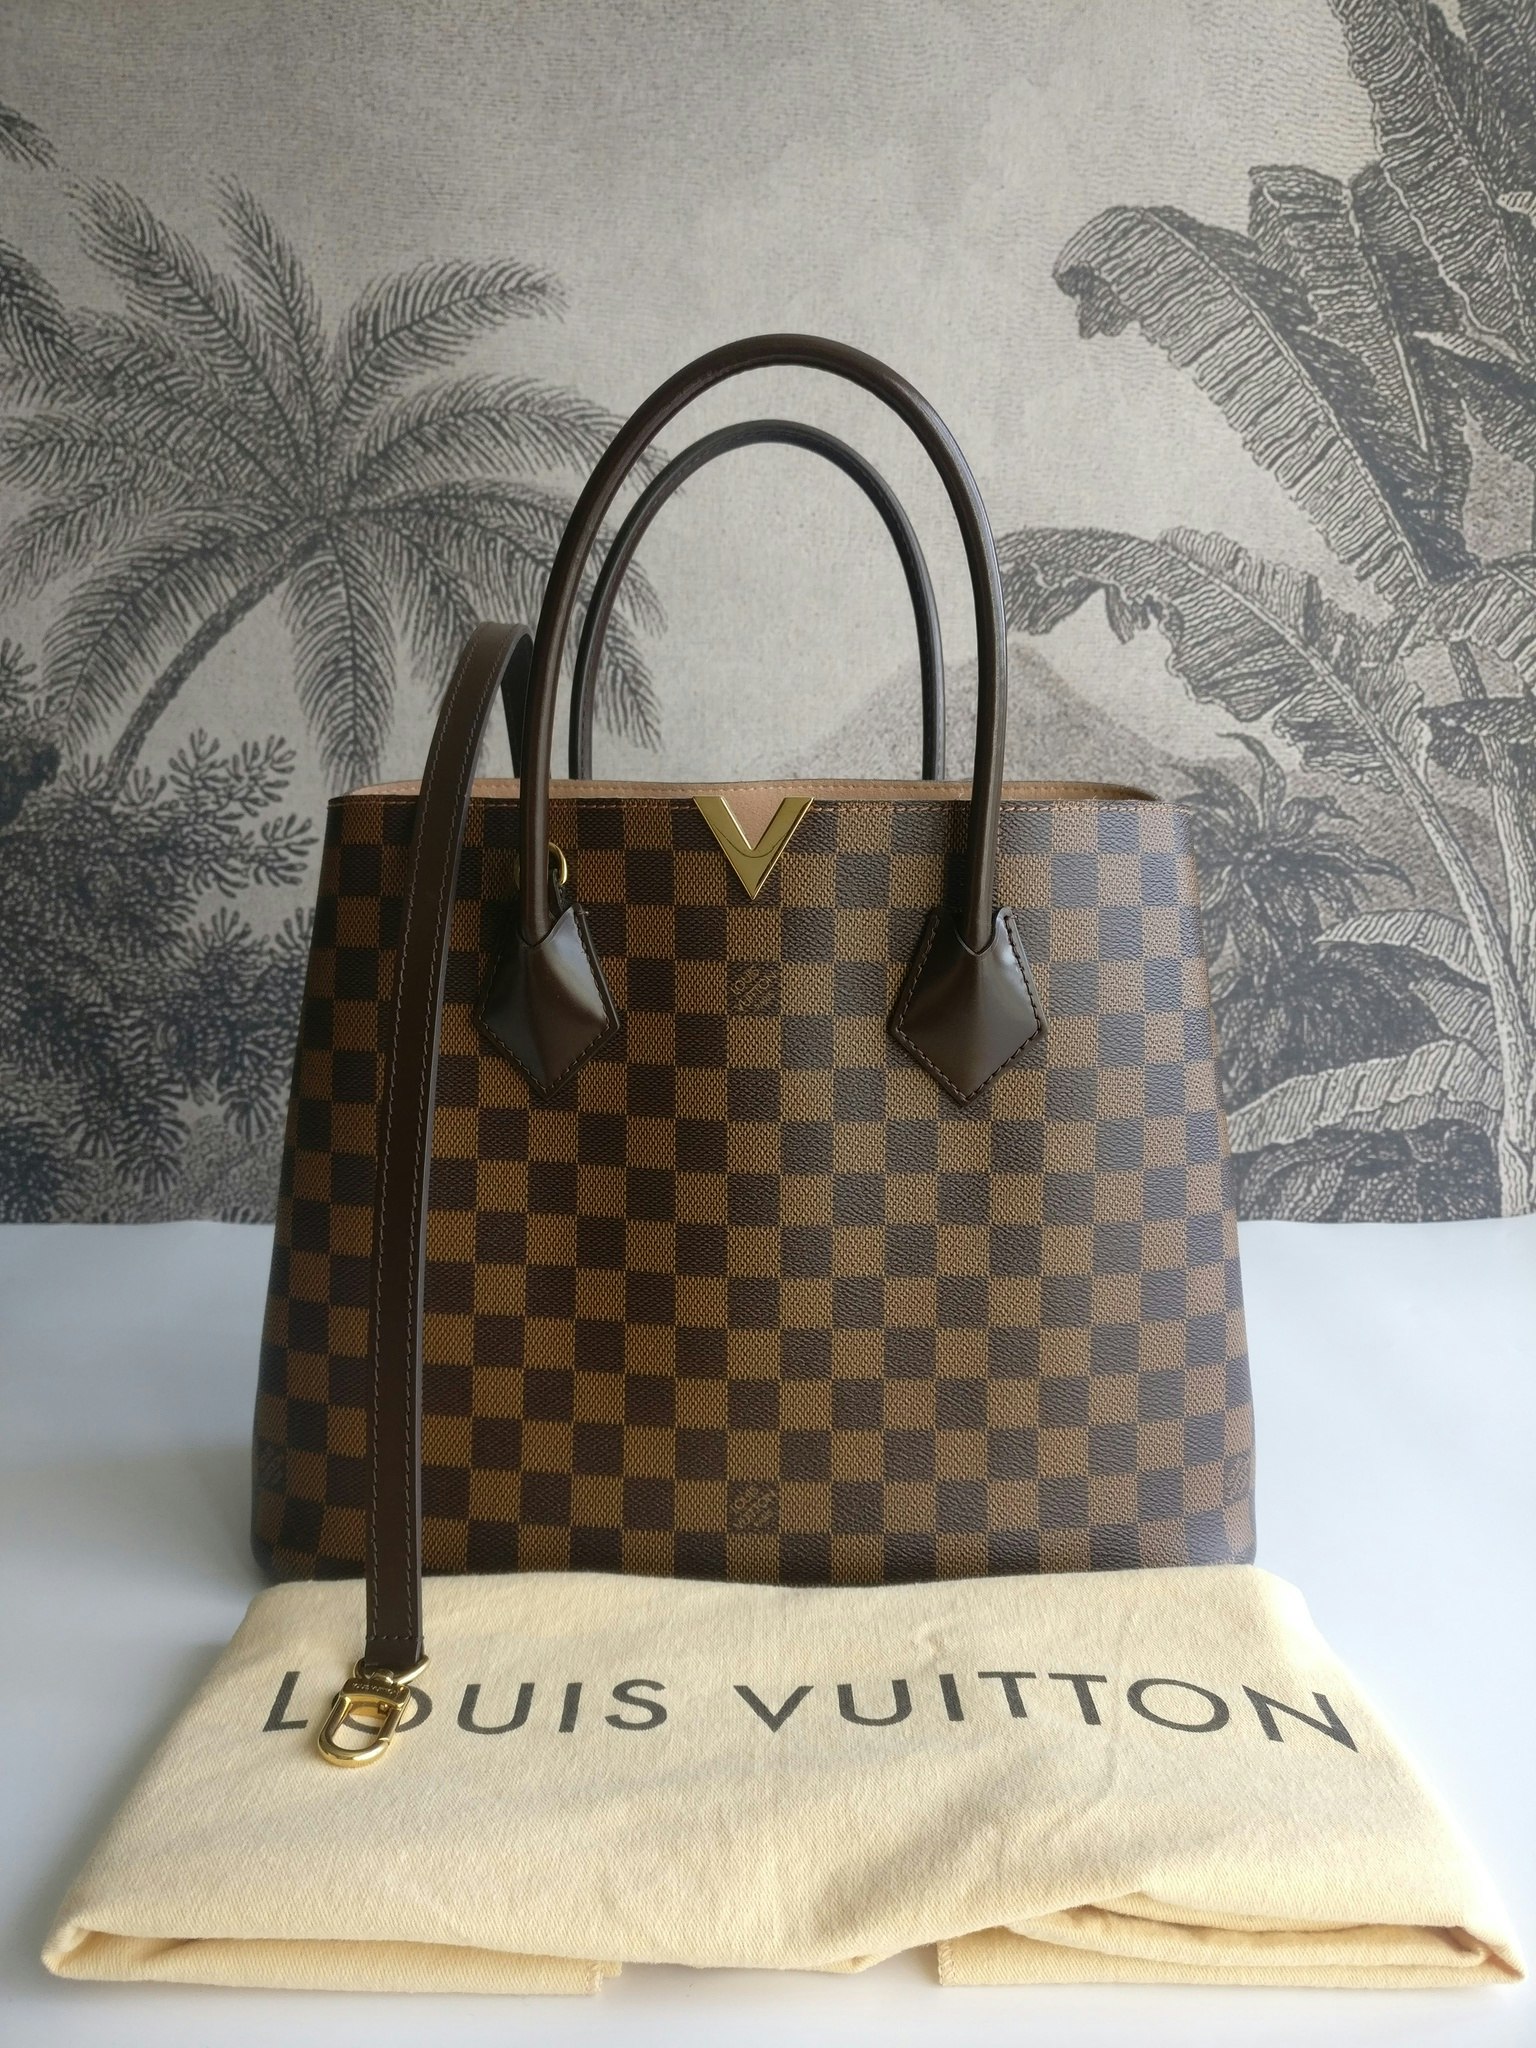 What's in my bag!, Louis Vuitton Kensington